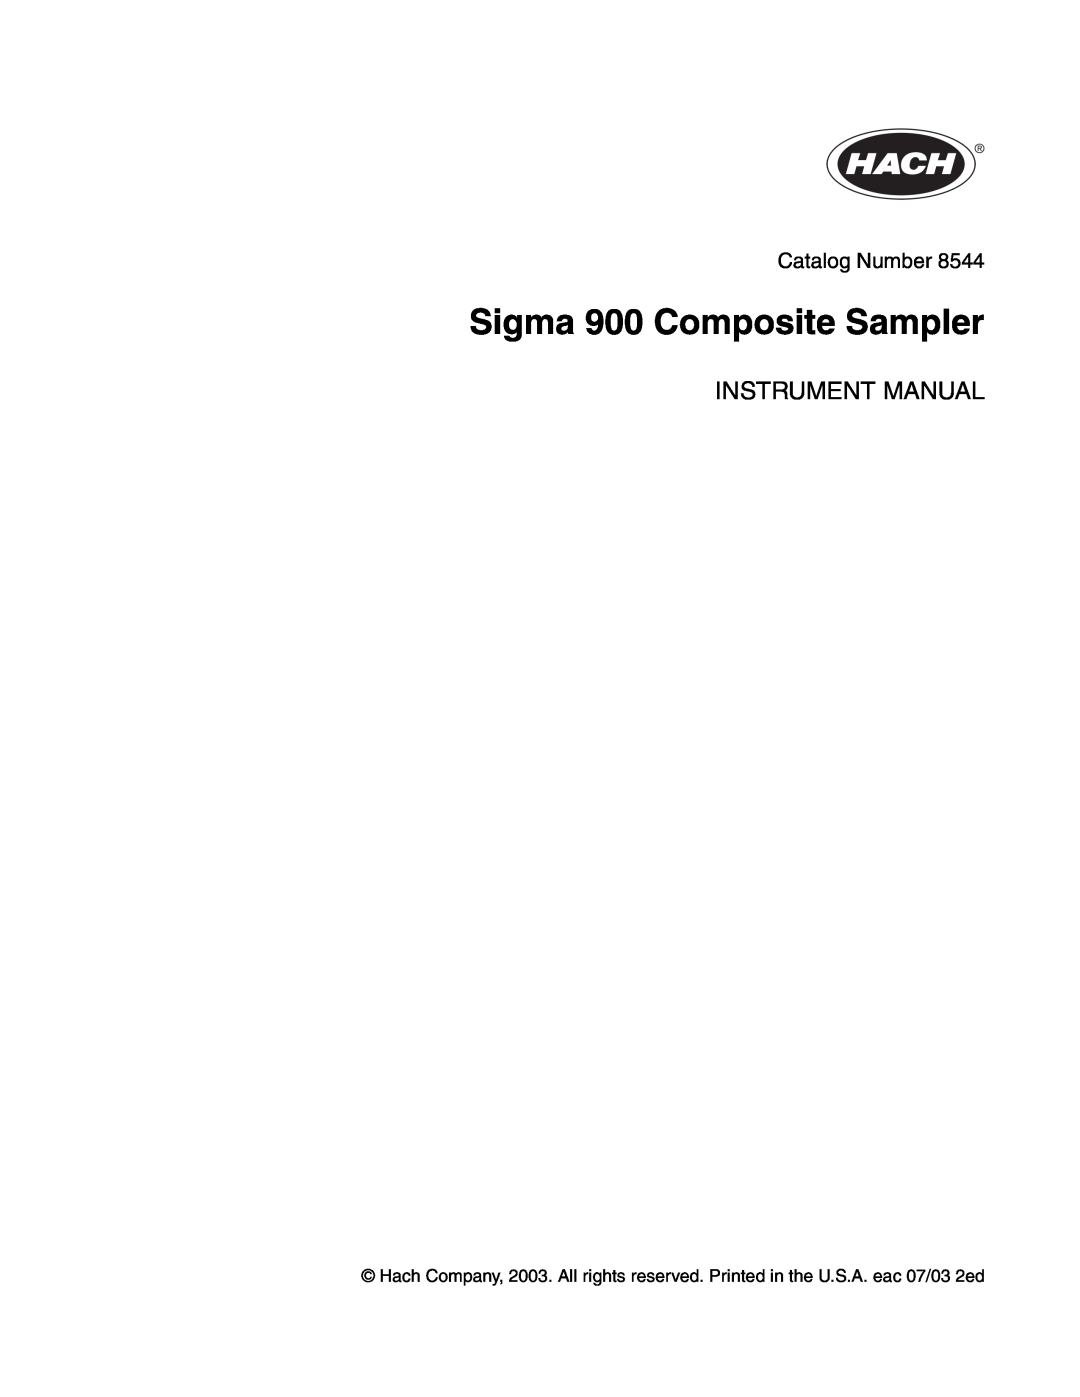 Hach manual Sigma 900 Composite Sampler, Instrument Manual, Catalog Number 